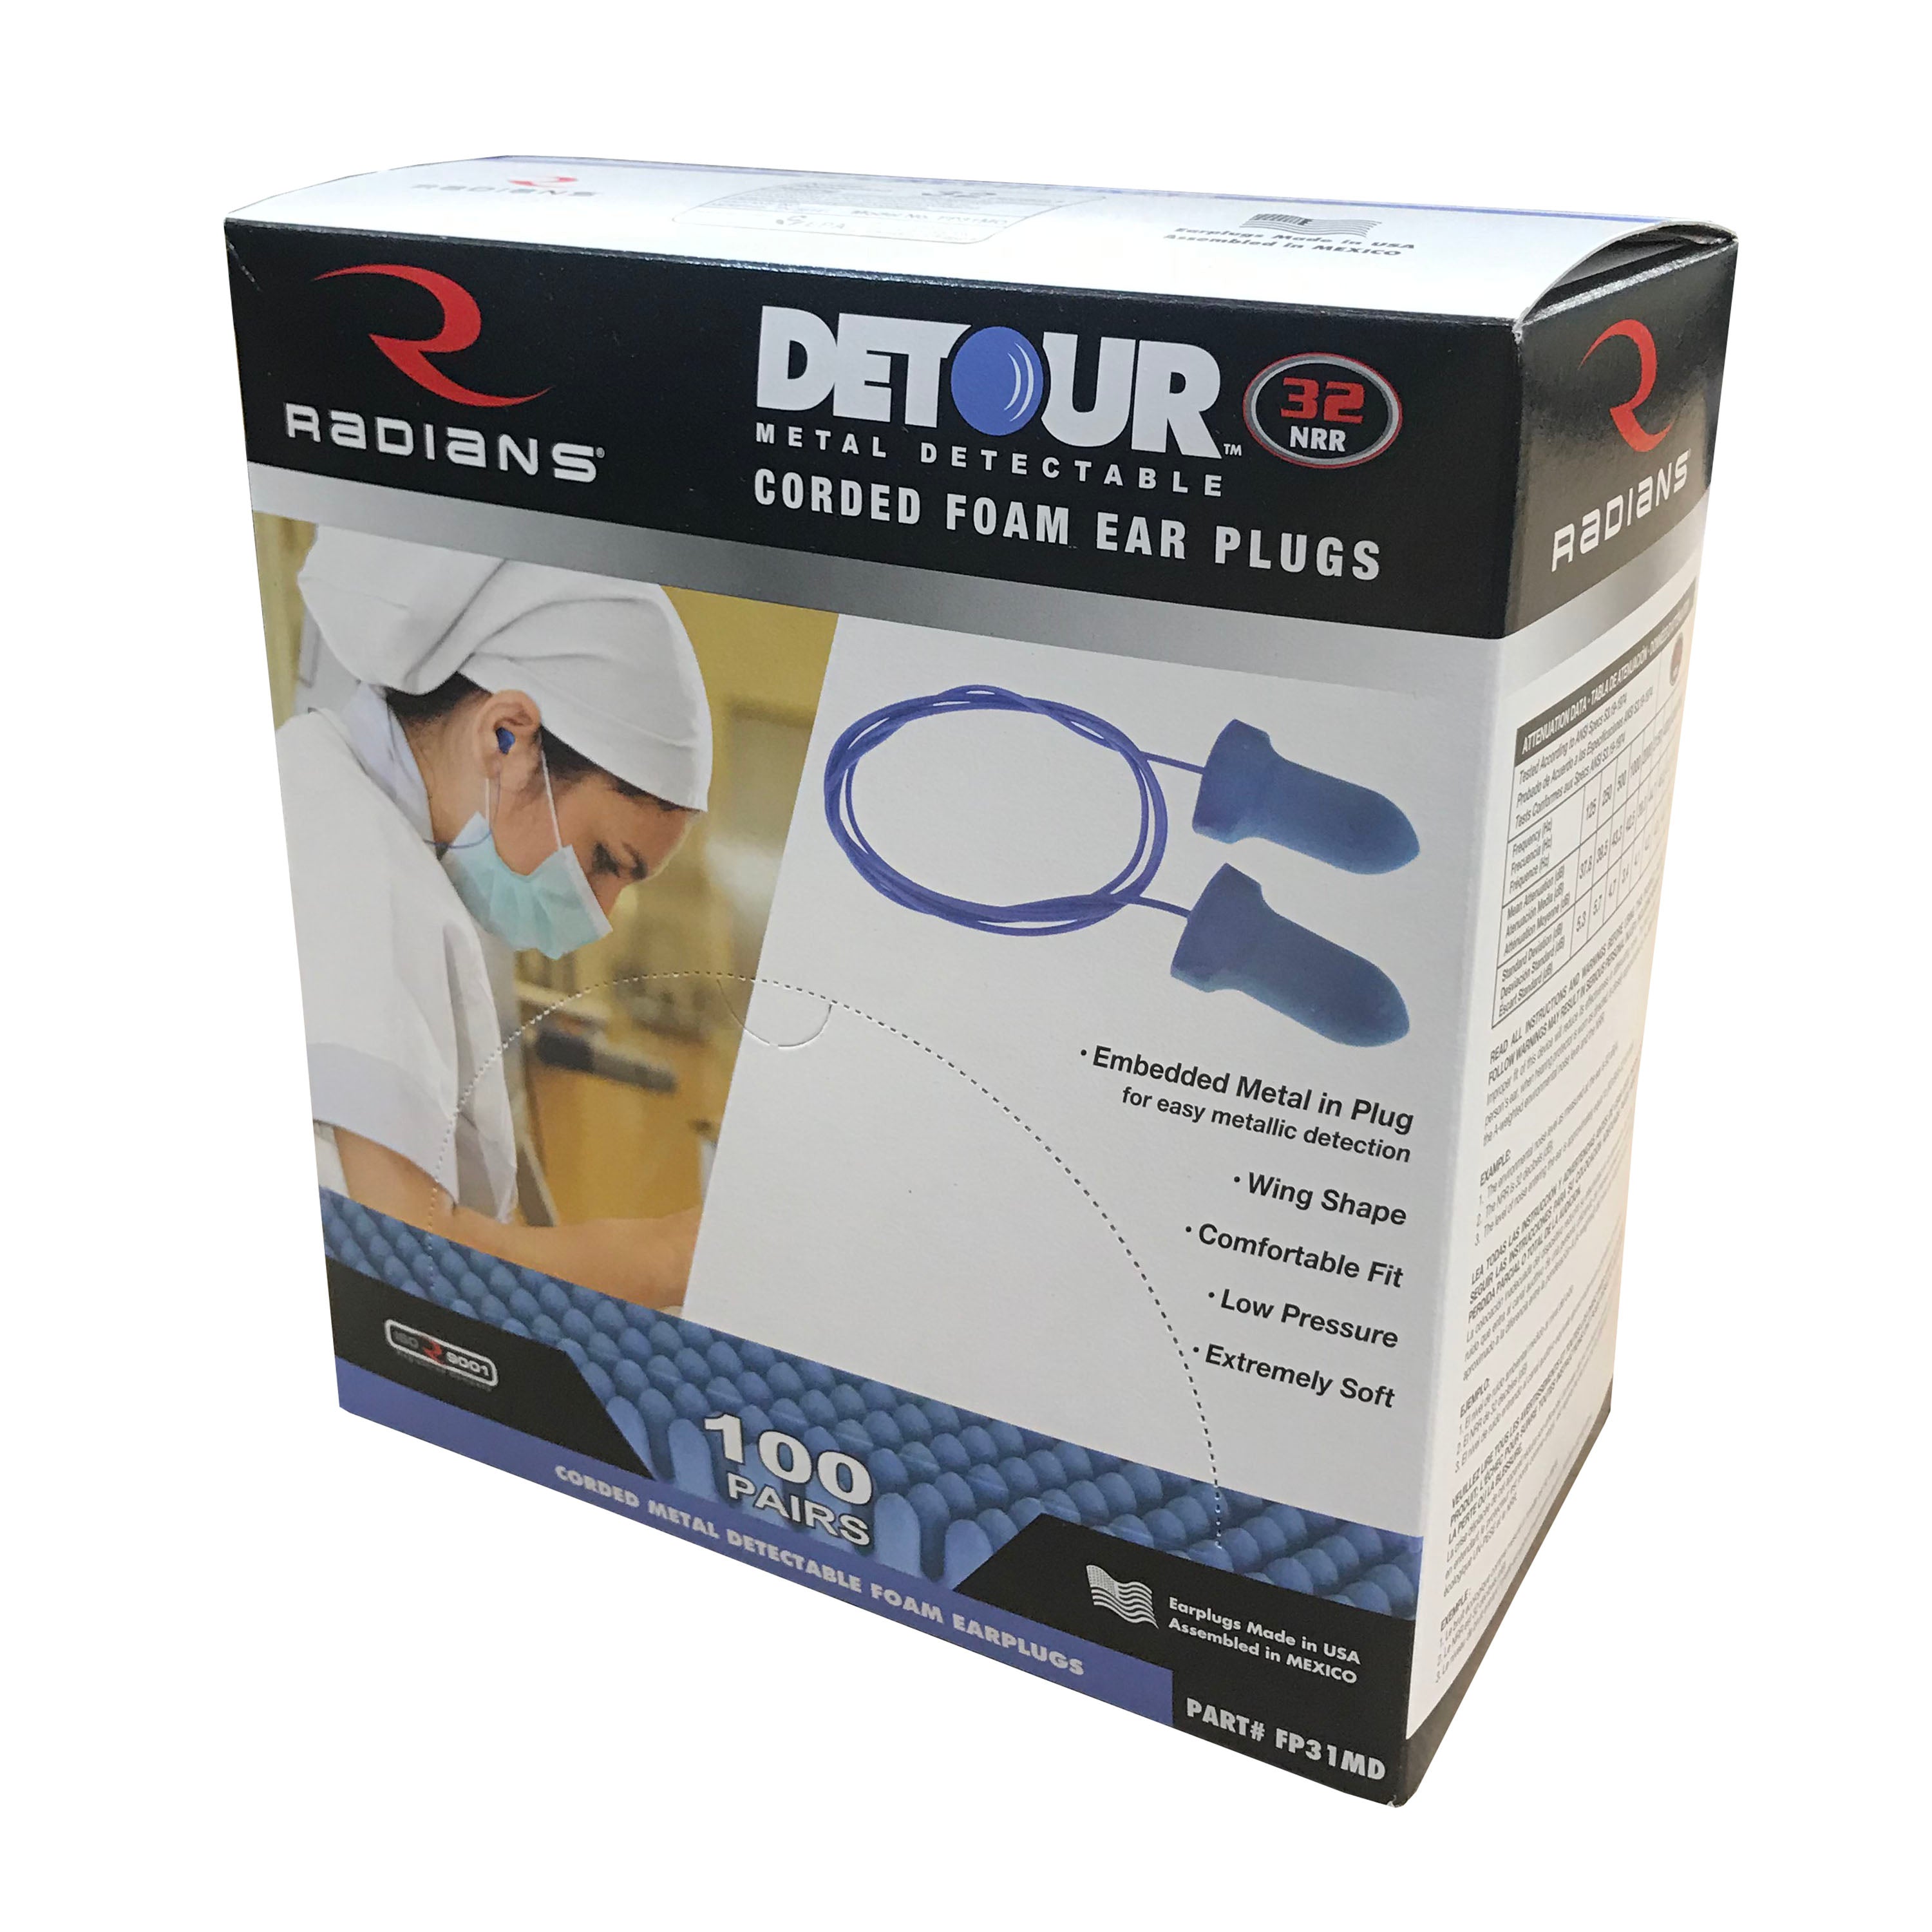 Detour® 32 Metal Detectable Foam Earplugs - Corded